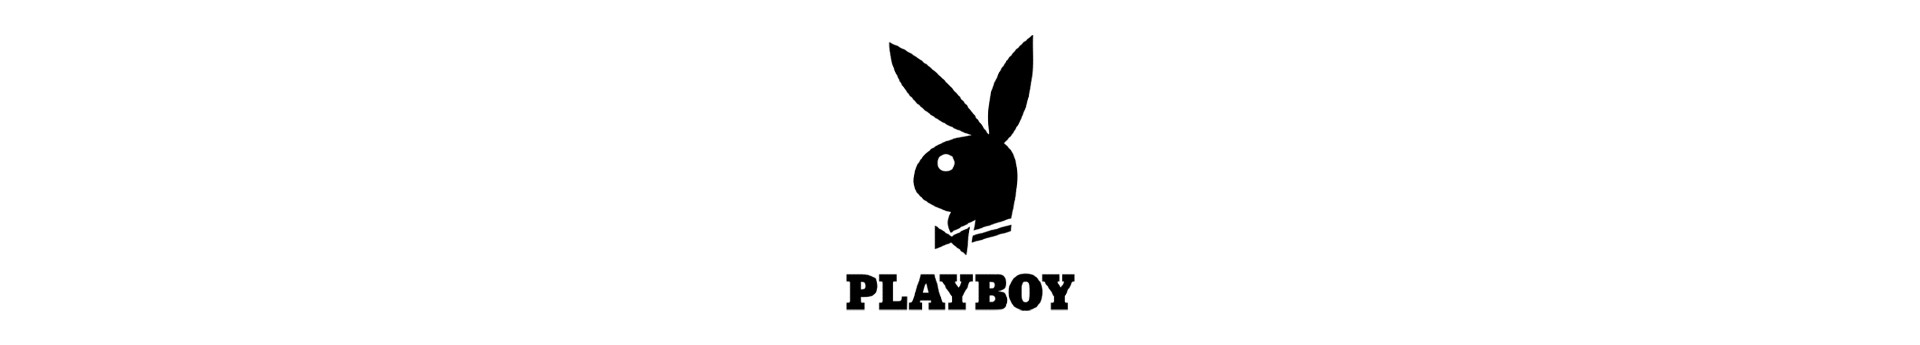 PlayBoy CBD